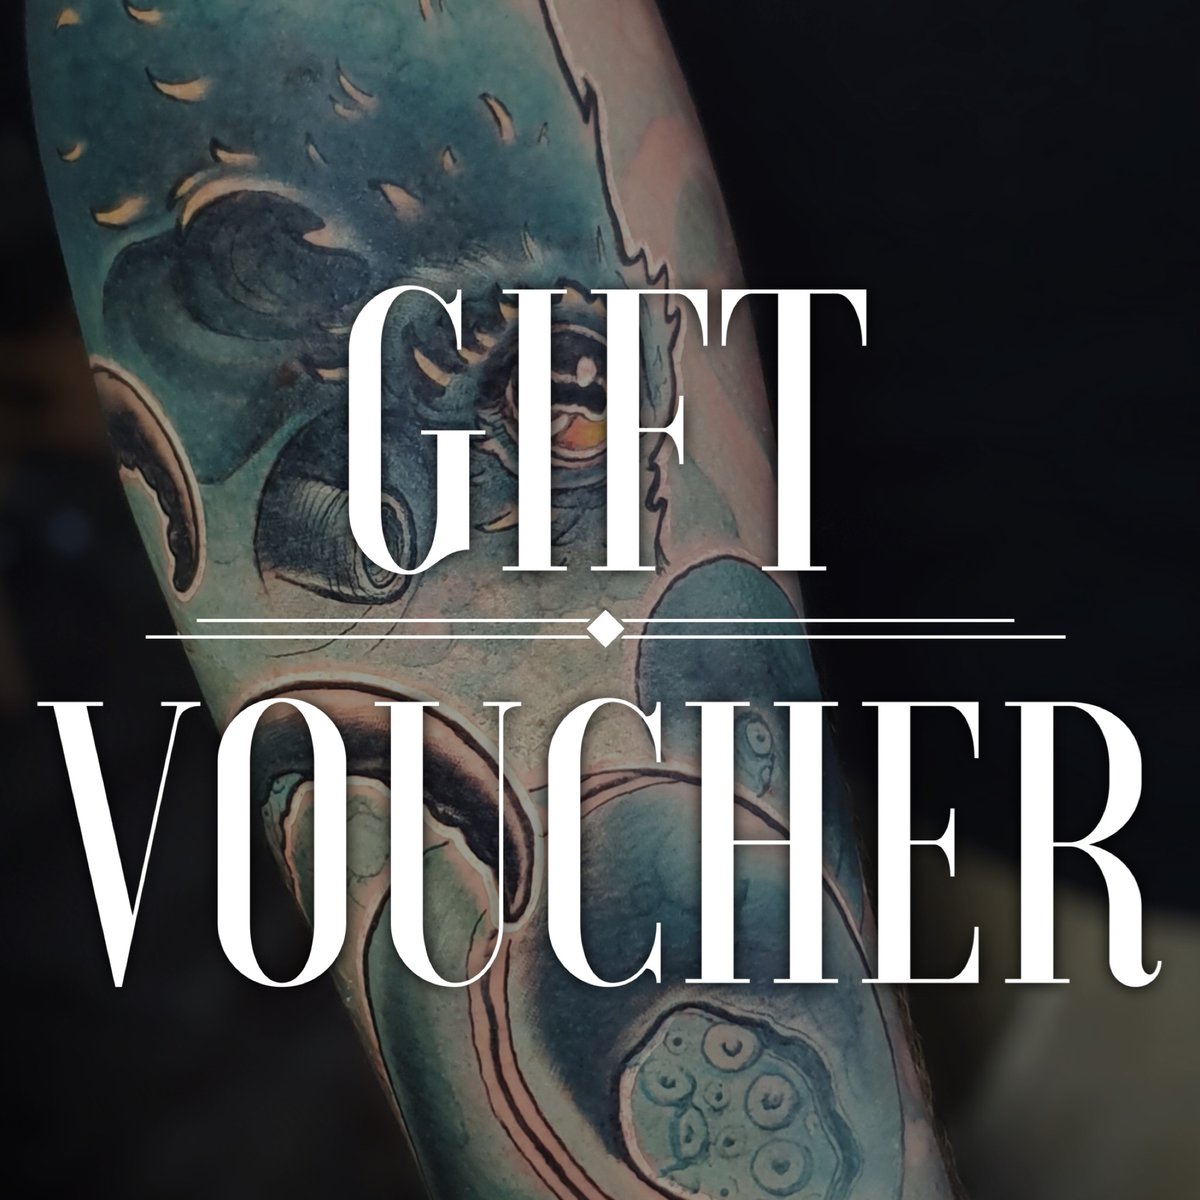 Image of Gift Voucher